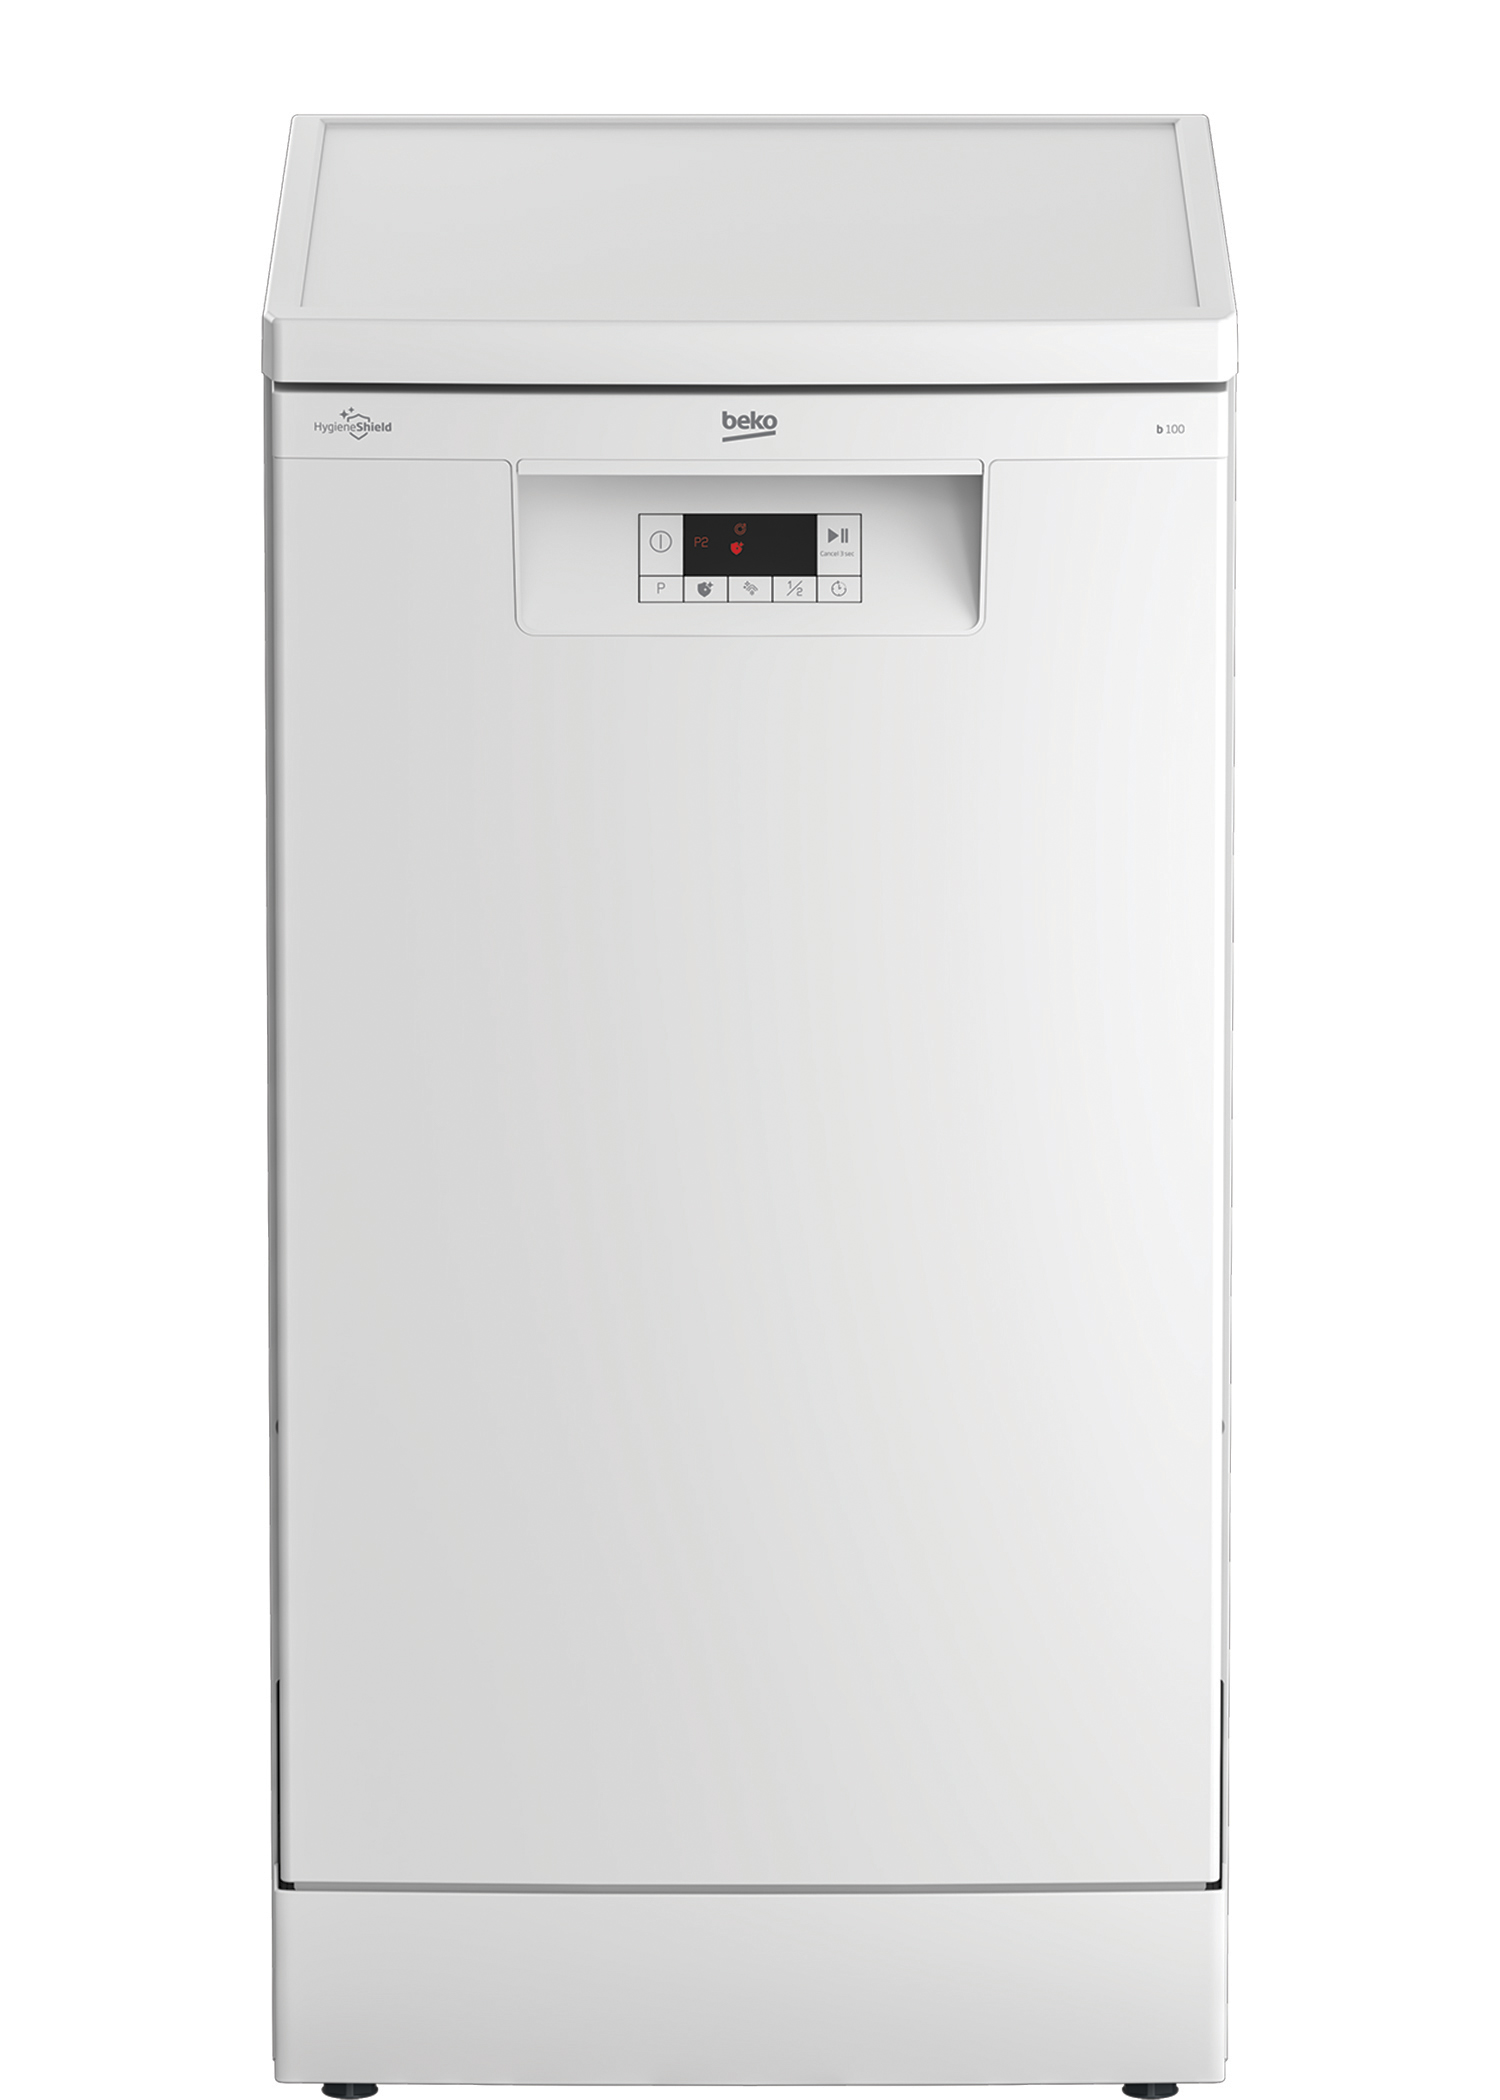 Посудомоечная машина Beko BDFS15021W белый отдельностоящая посудомоечная машина 45см dvs050r02s 7656308335 beko